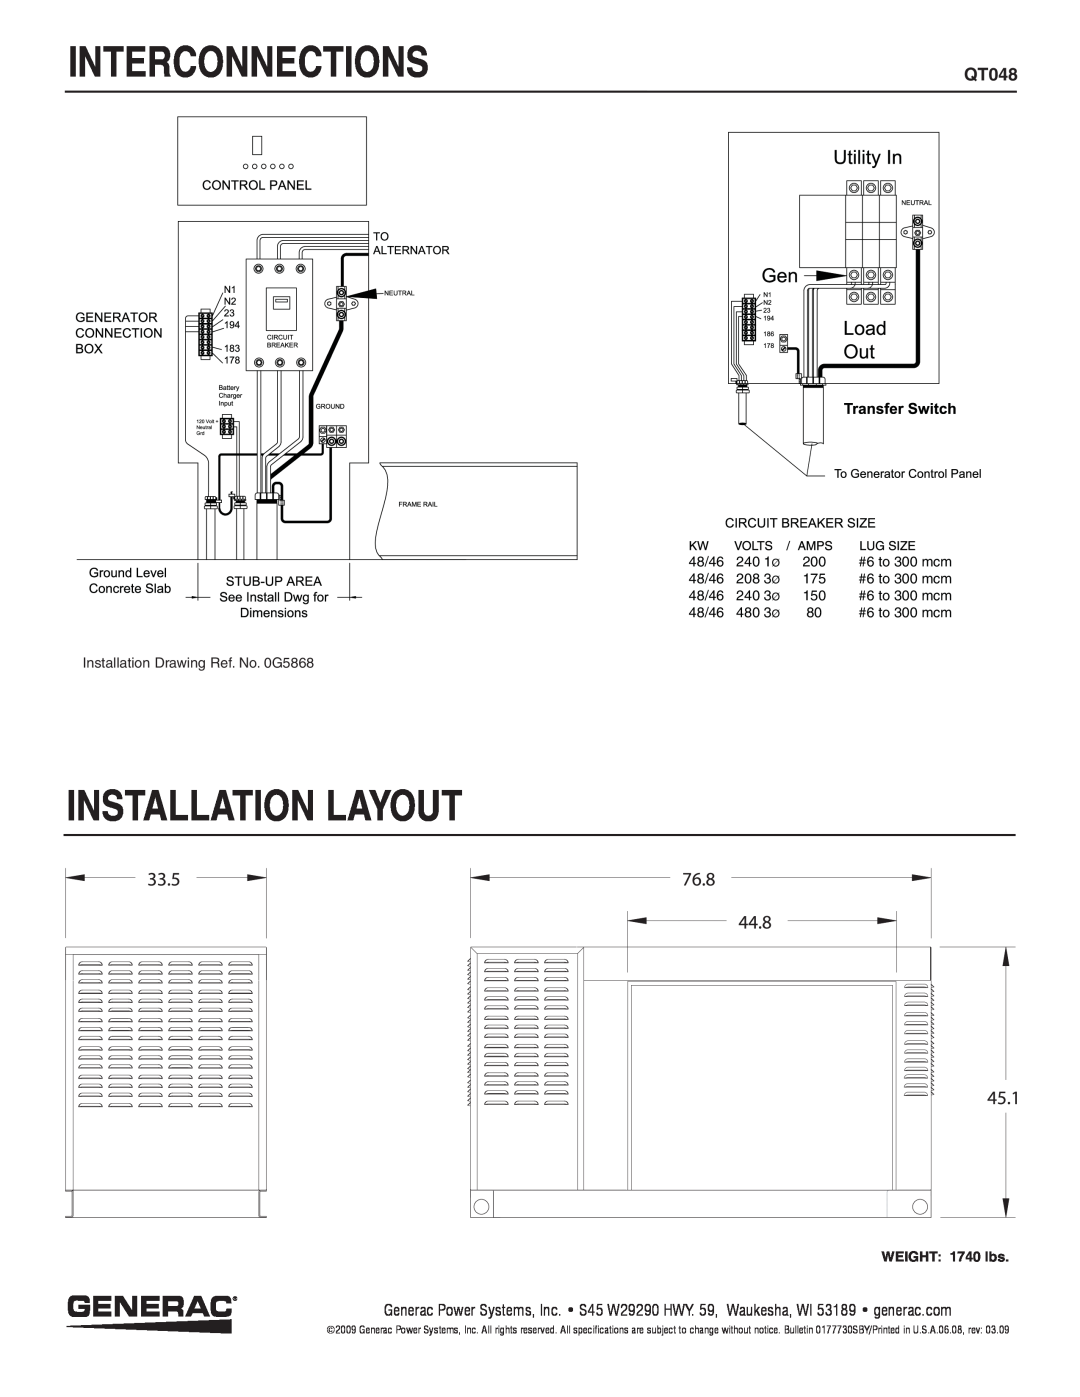 Generac QT04842KNAX manual Interconnections, Installation Layout, WEIGHT: 1740 lbs 